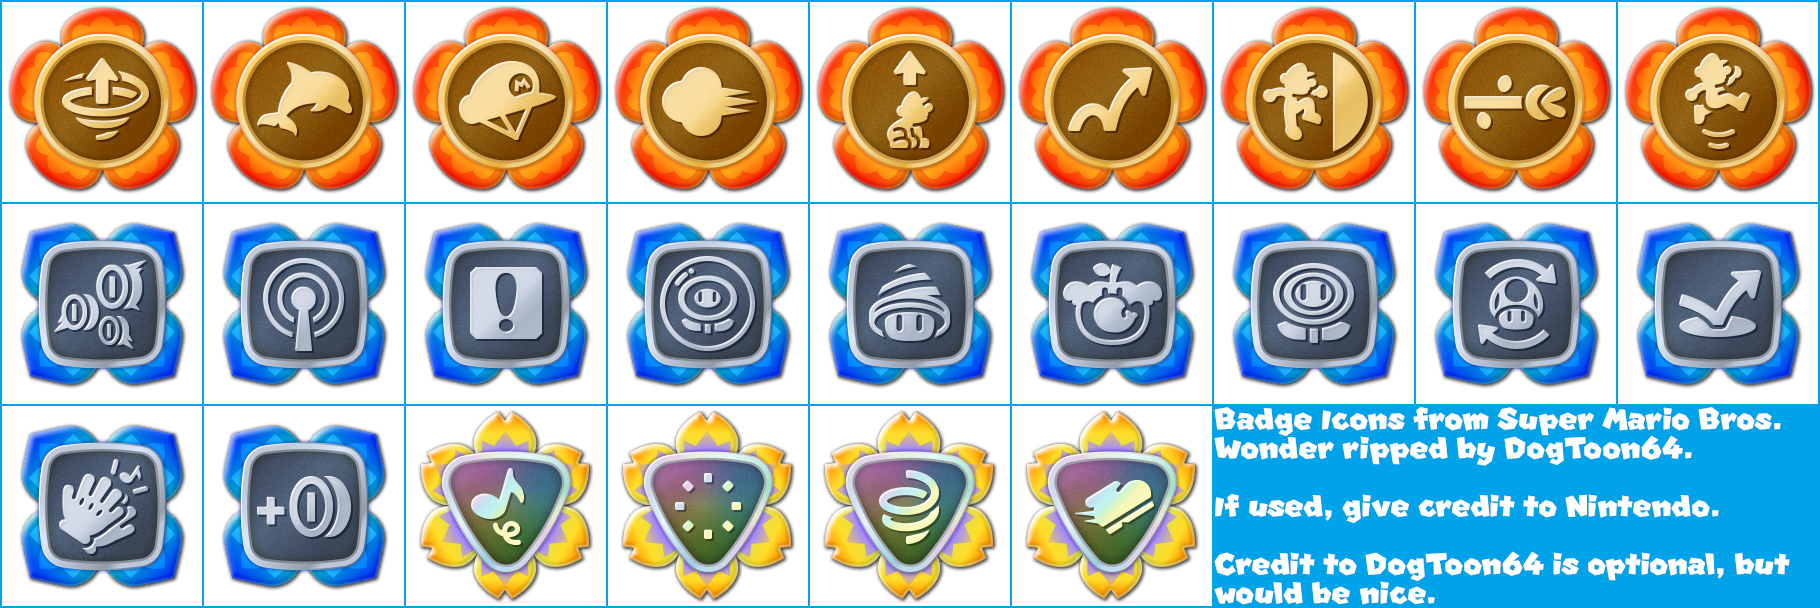 Super Mario Bros. Wonder - Badge Icons